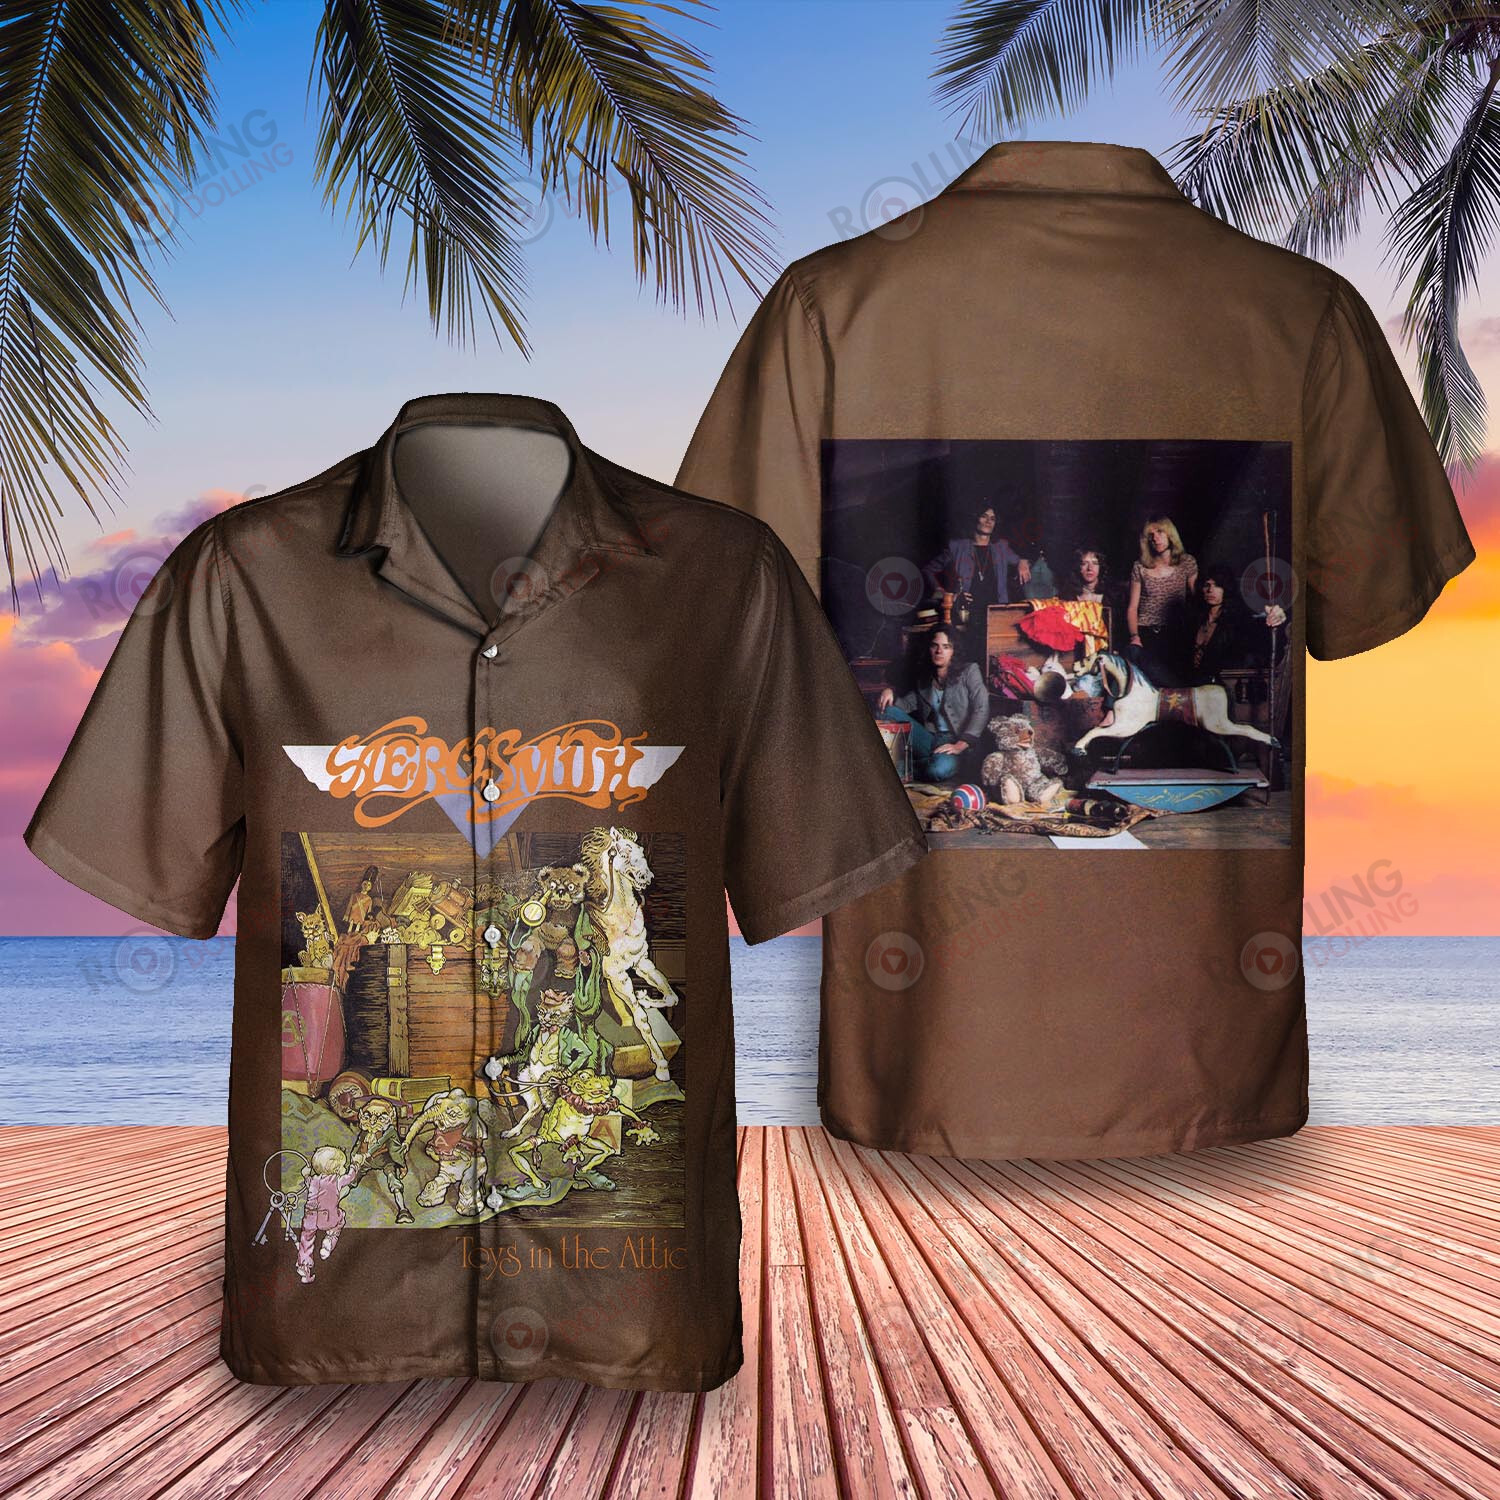 Regardless of their style, you will feel comfortable wearing Hawaiian Shirt 78